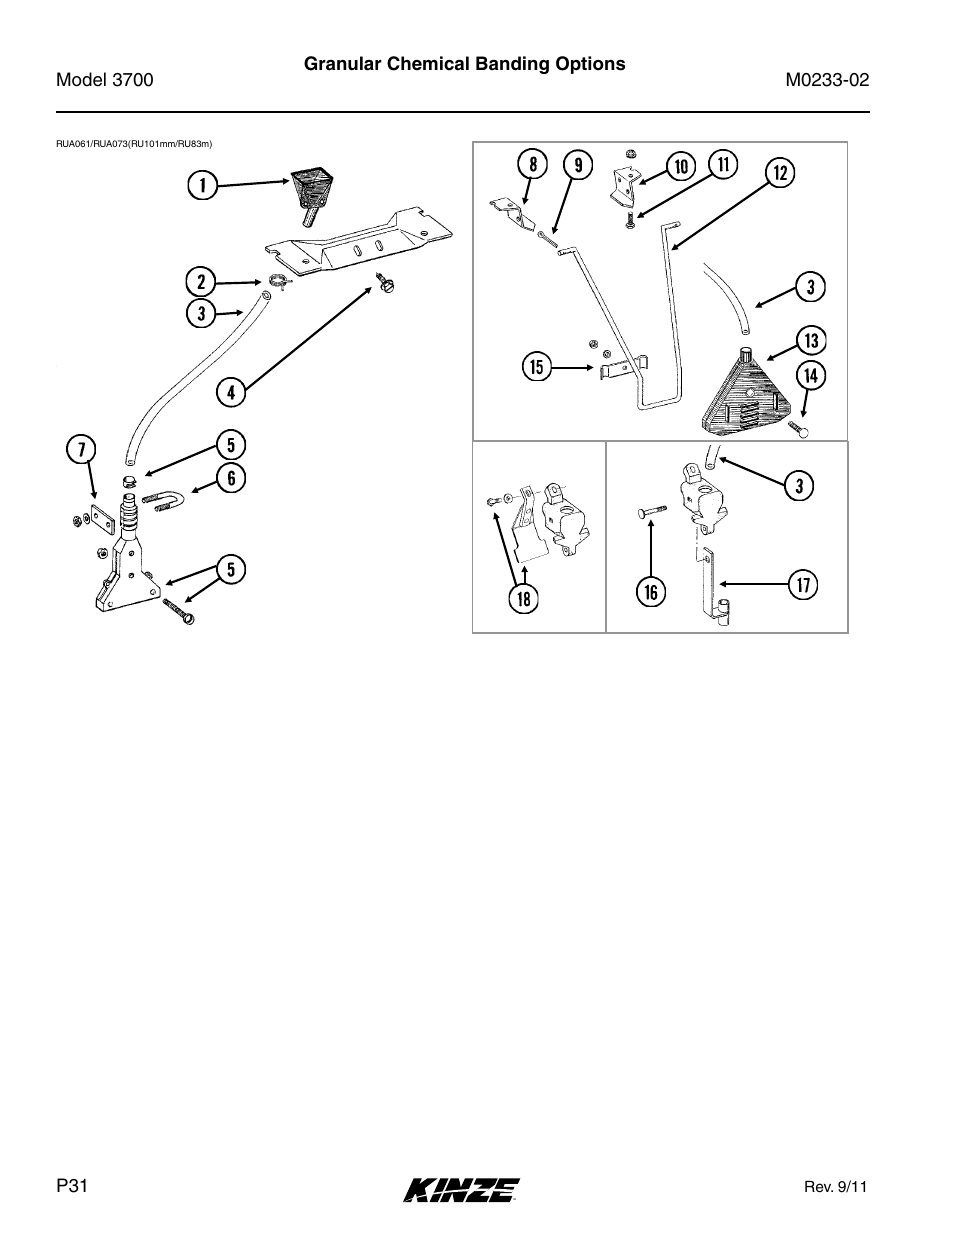 Granular chemical banding options | Kinze 3700 Front Folding Planter Rev. 6/14 User Manual | Page 34 / 284